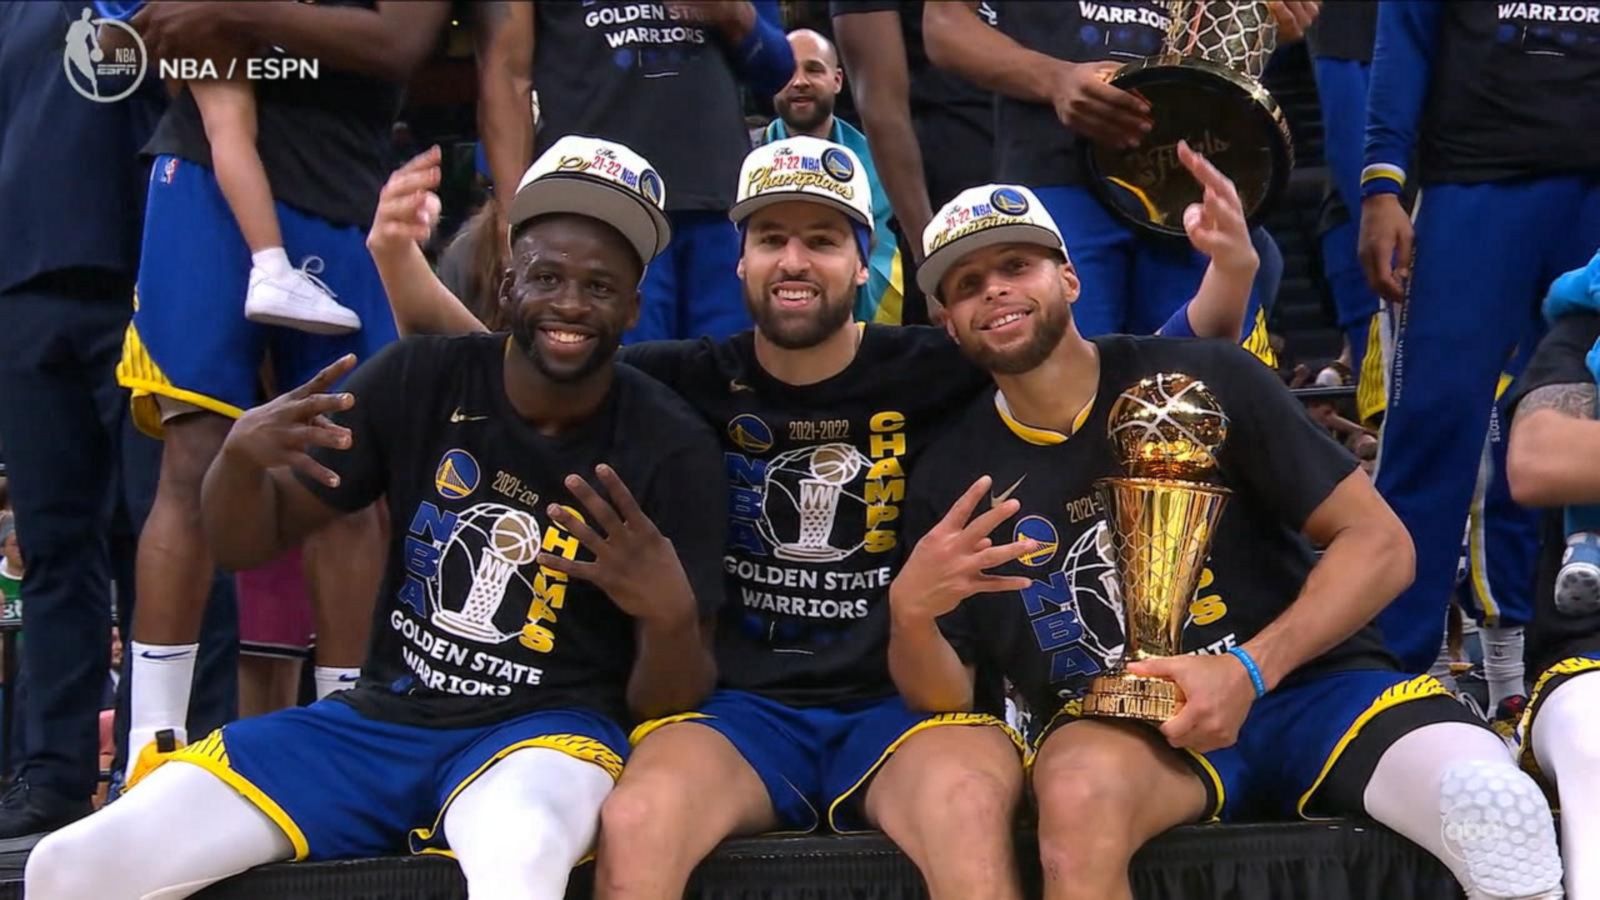 Warriors win 2022 NBA Championship